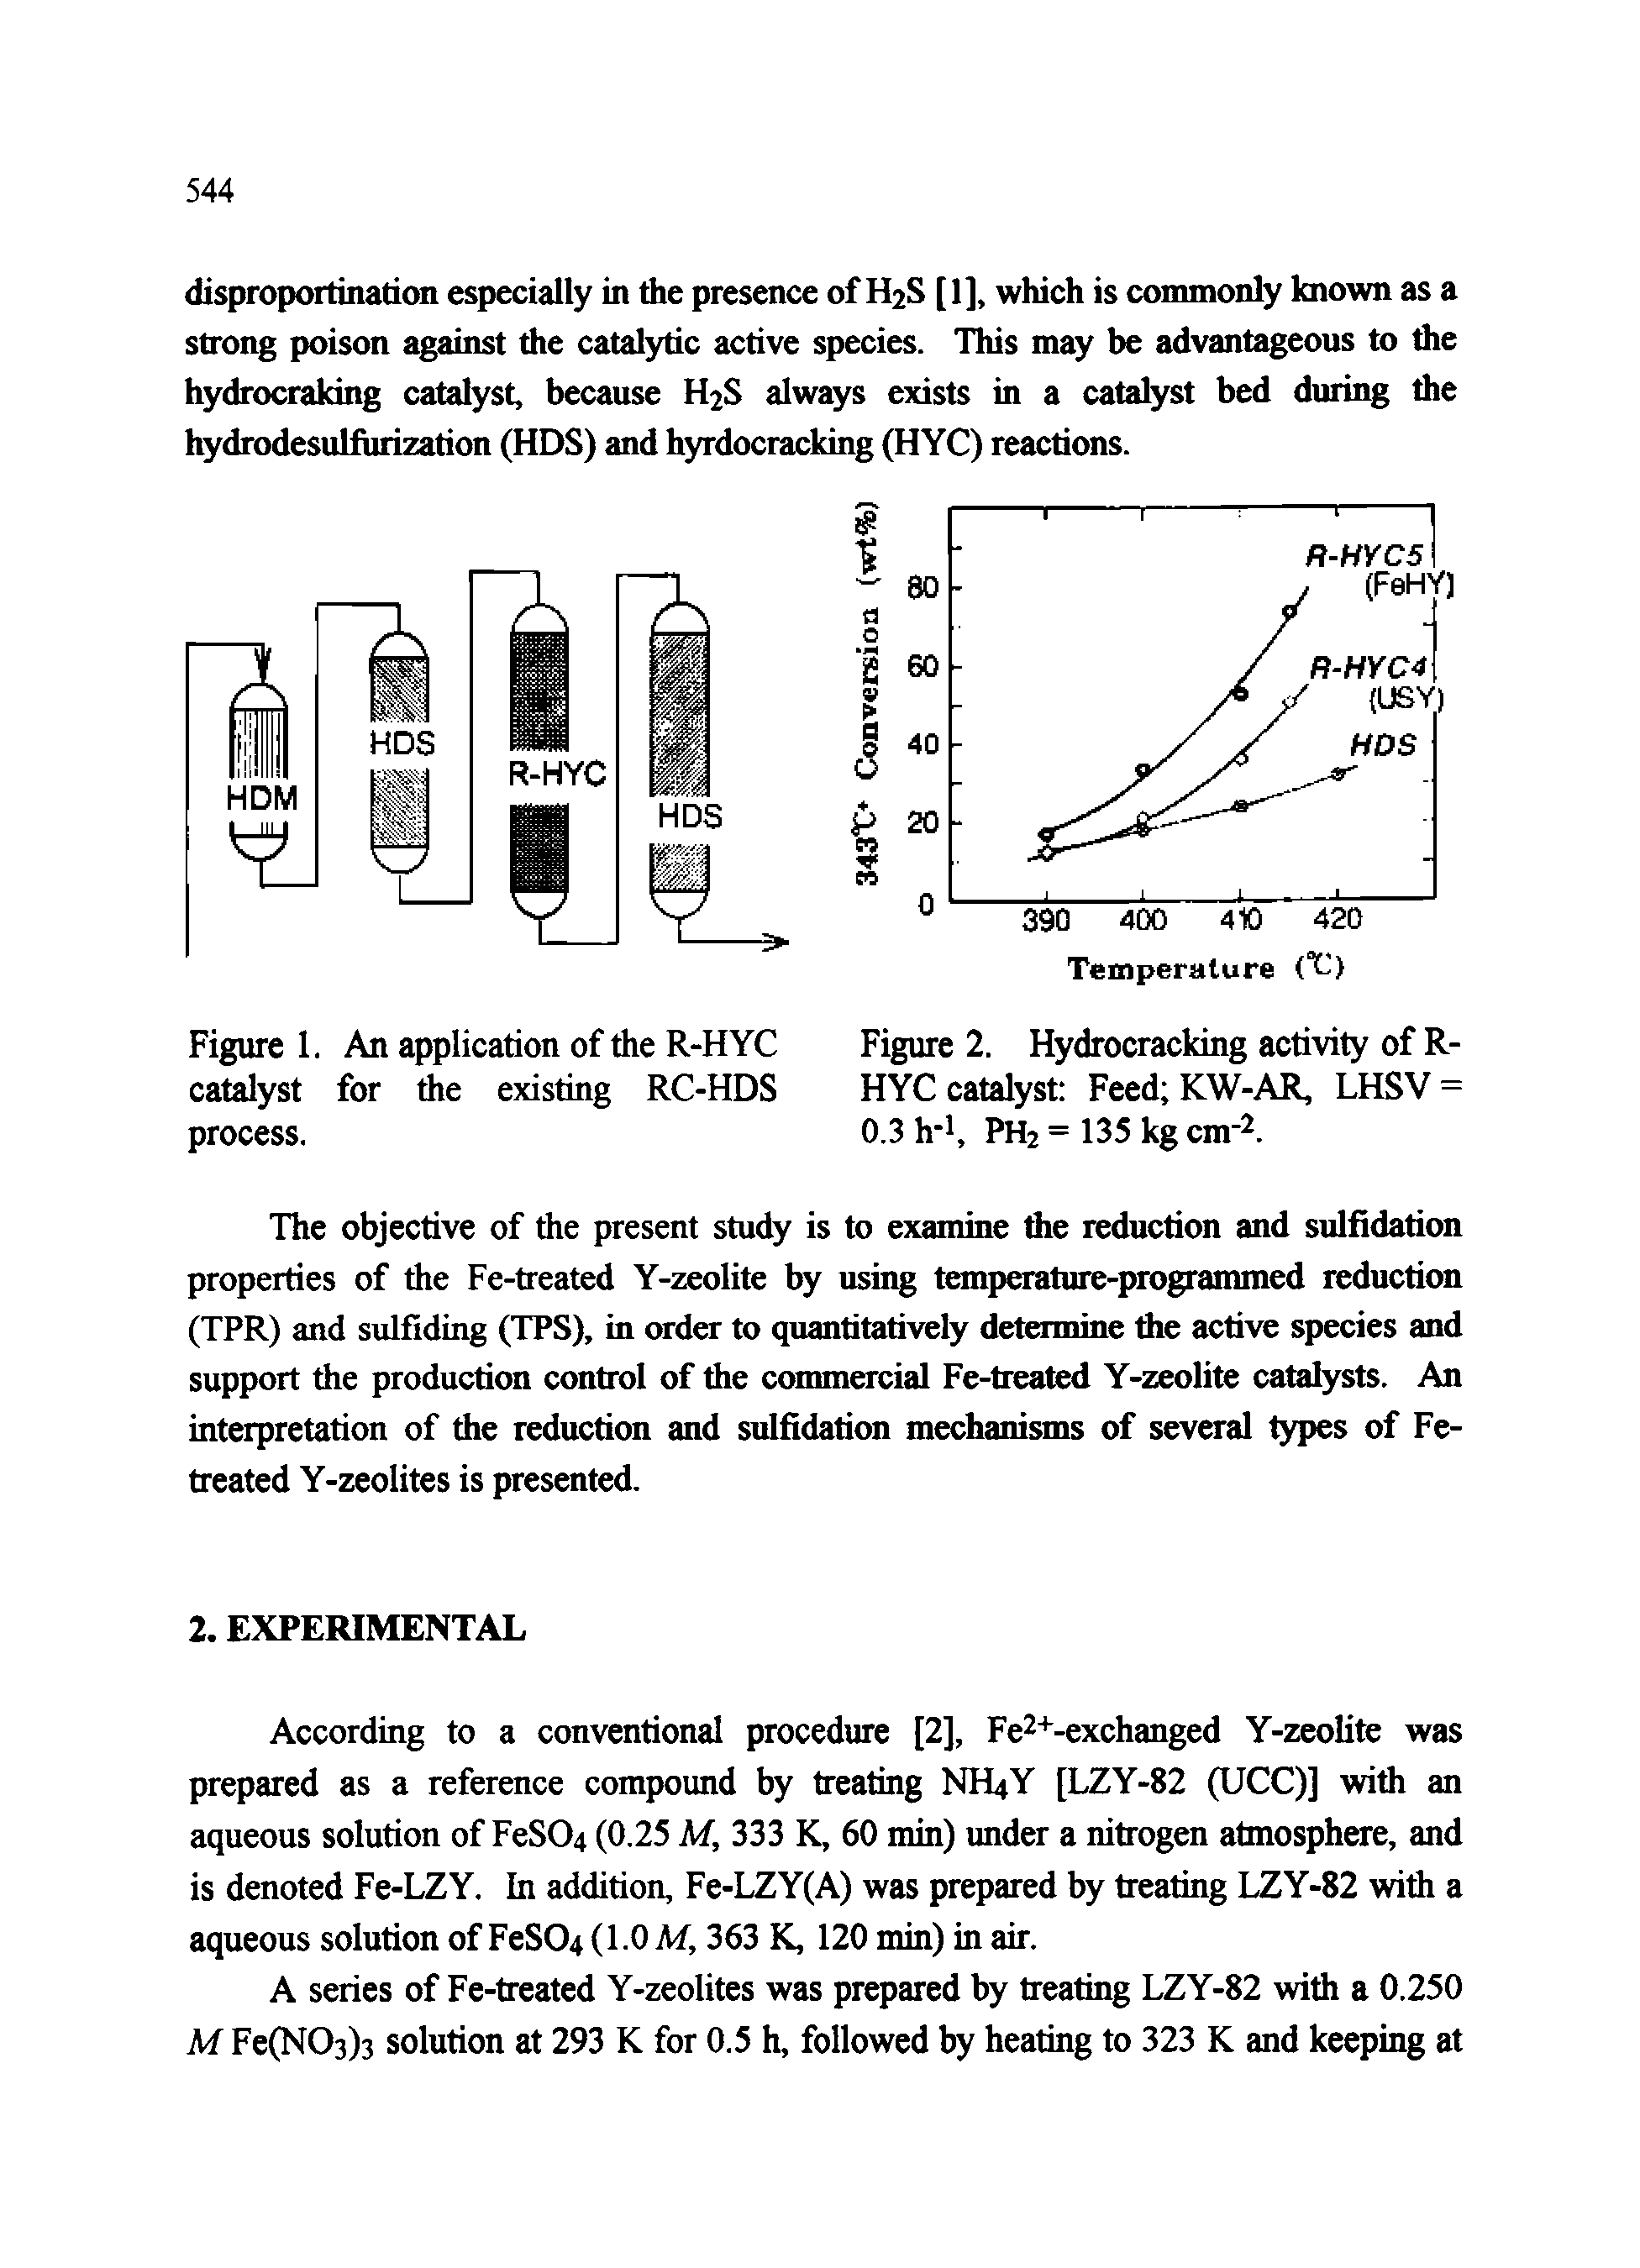 Figure 2. Hydrocracking activity of R-HYC catalyst Feed KW-AR, LHSV = 0.3 h l, PH2 = 135 kg cm". ...